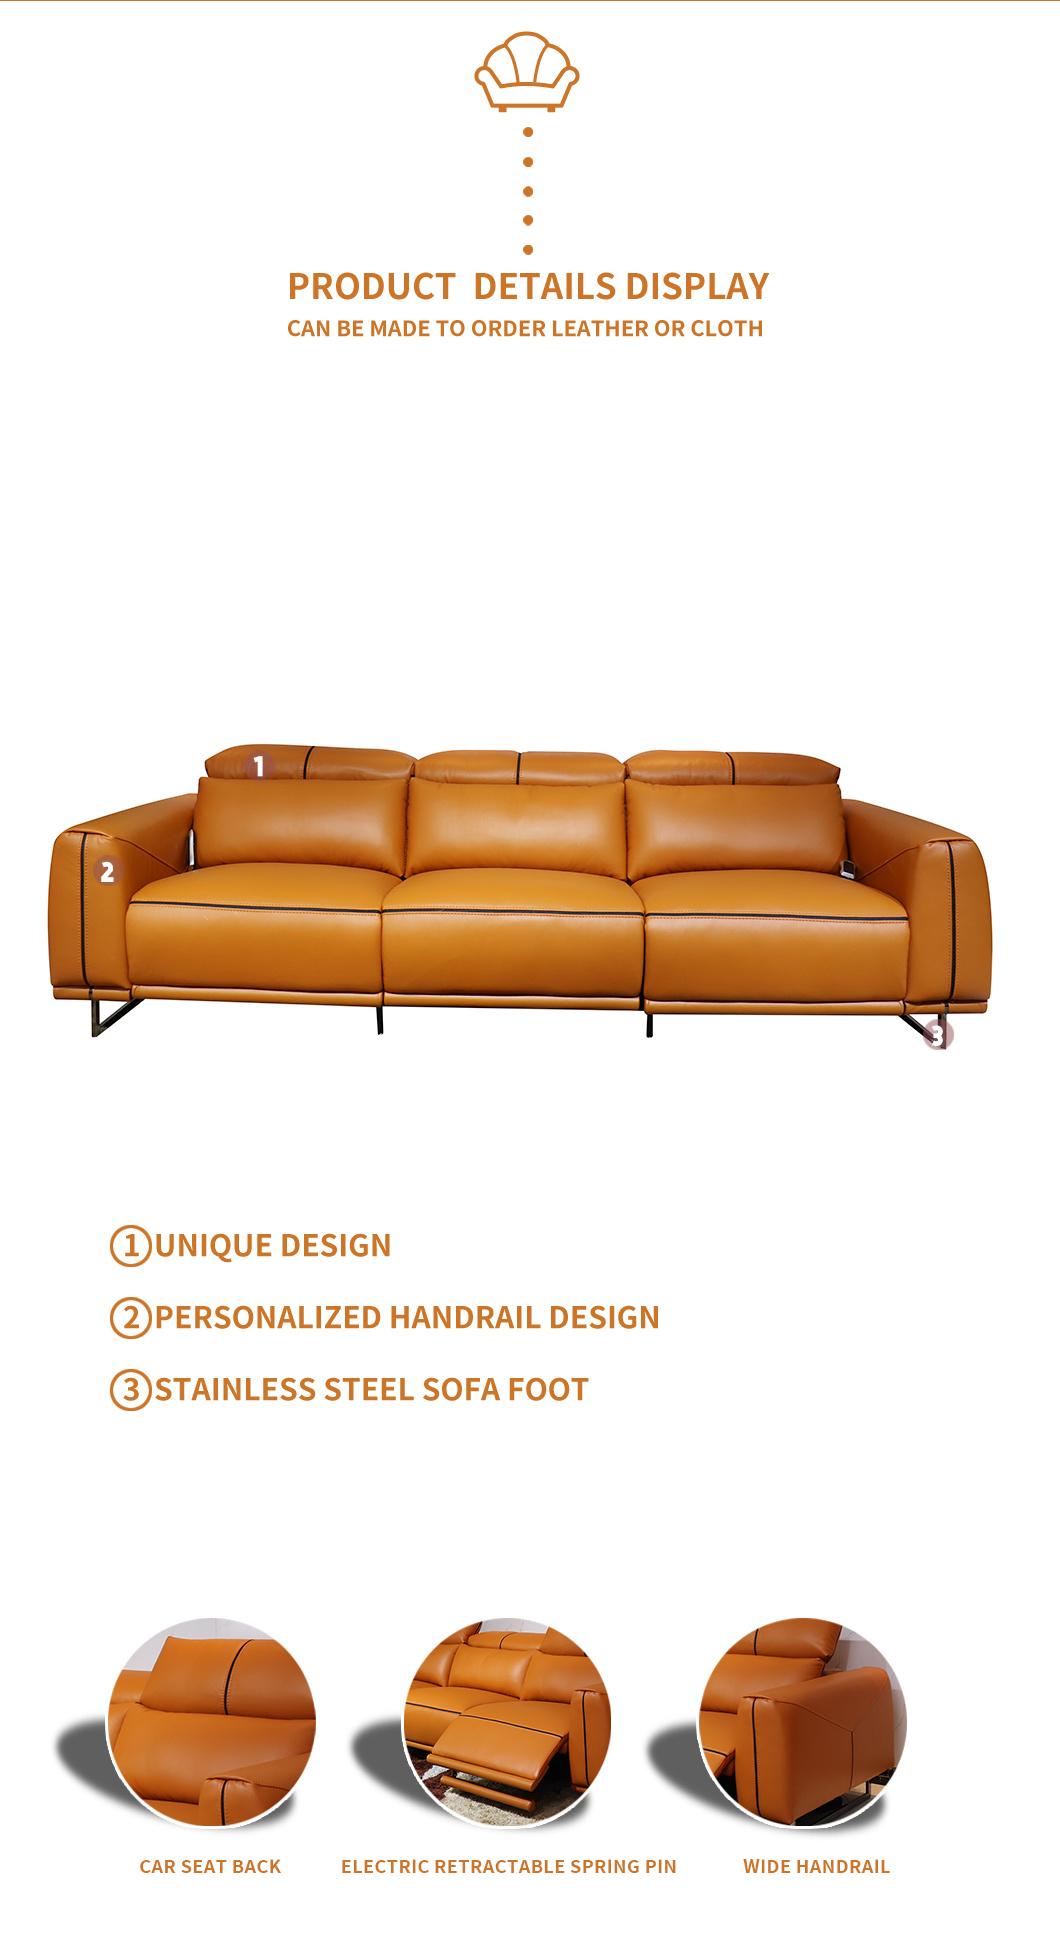 New Arrived Ear of Aesthetic Modern Functional Recliner Sofa Living Room Furniture